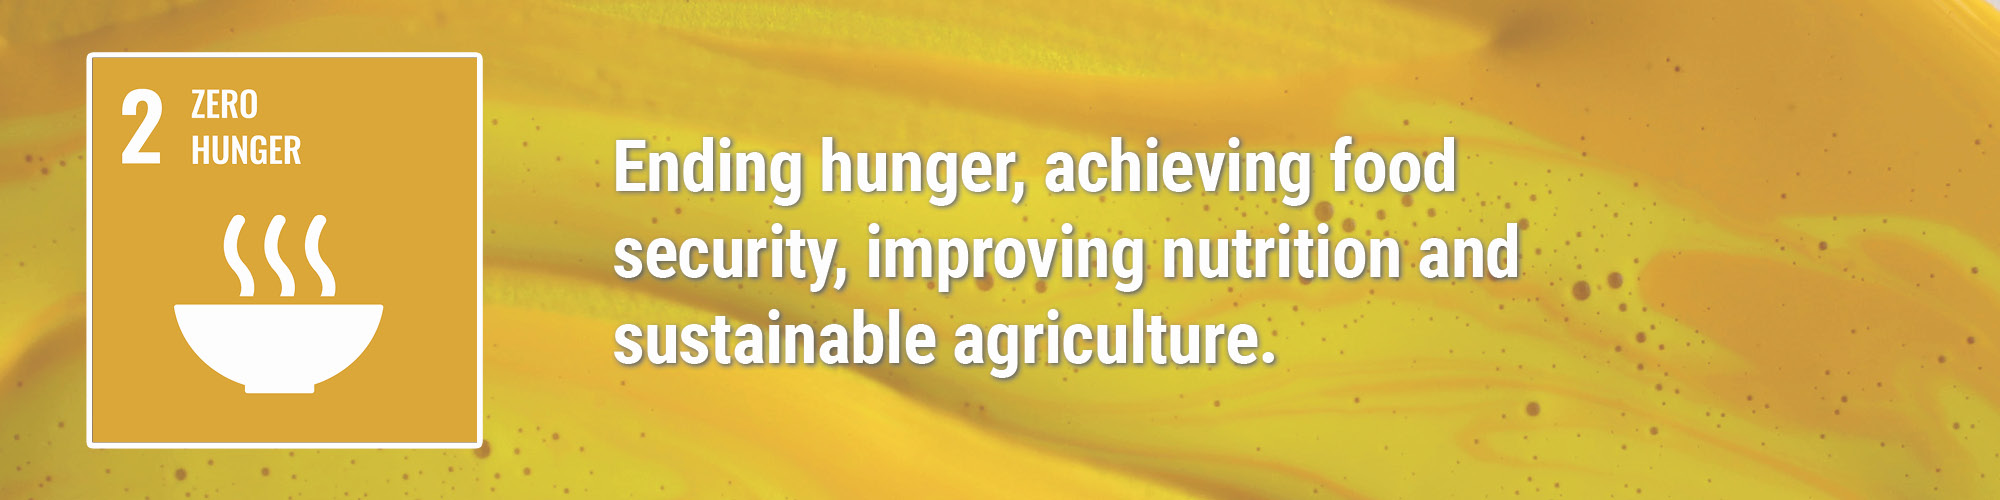 Goal Zero Hunger Sustainability Council